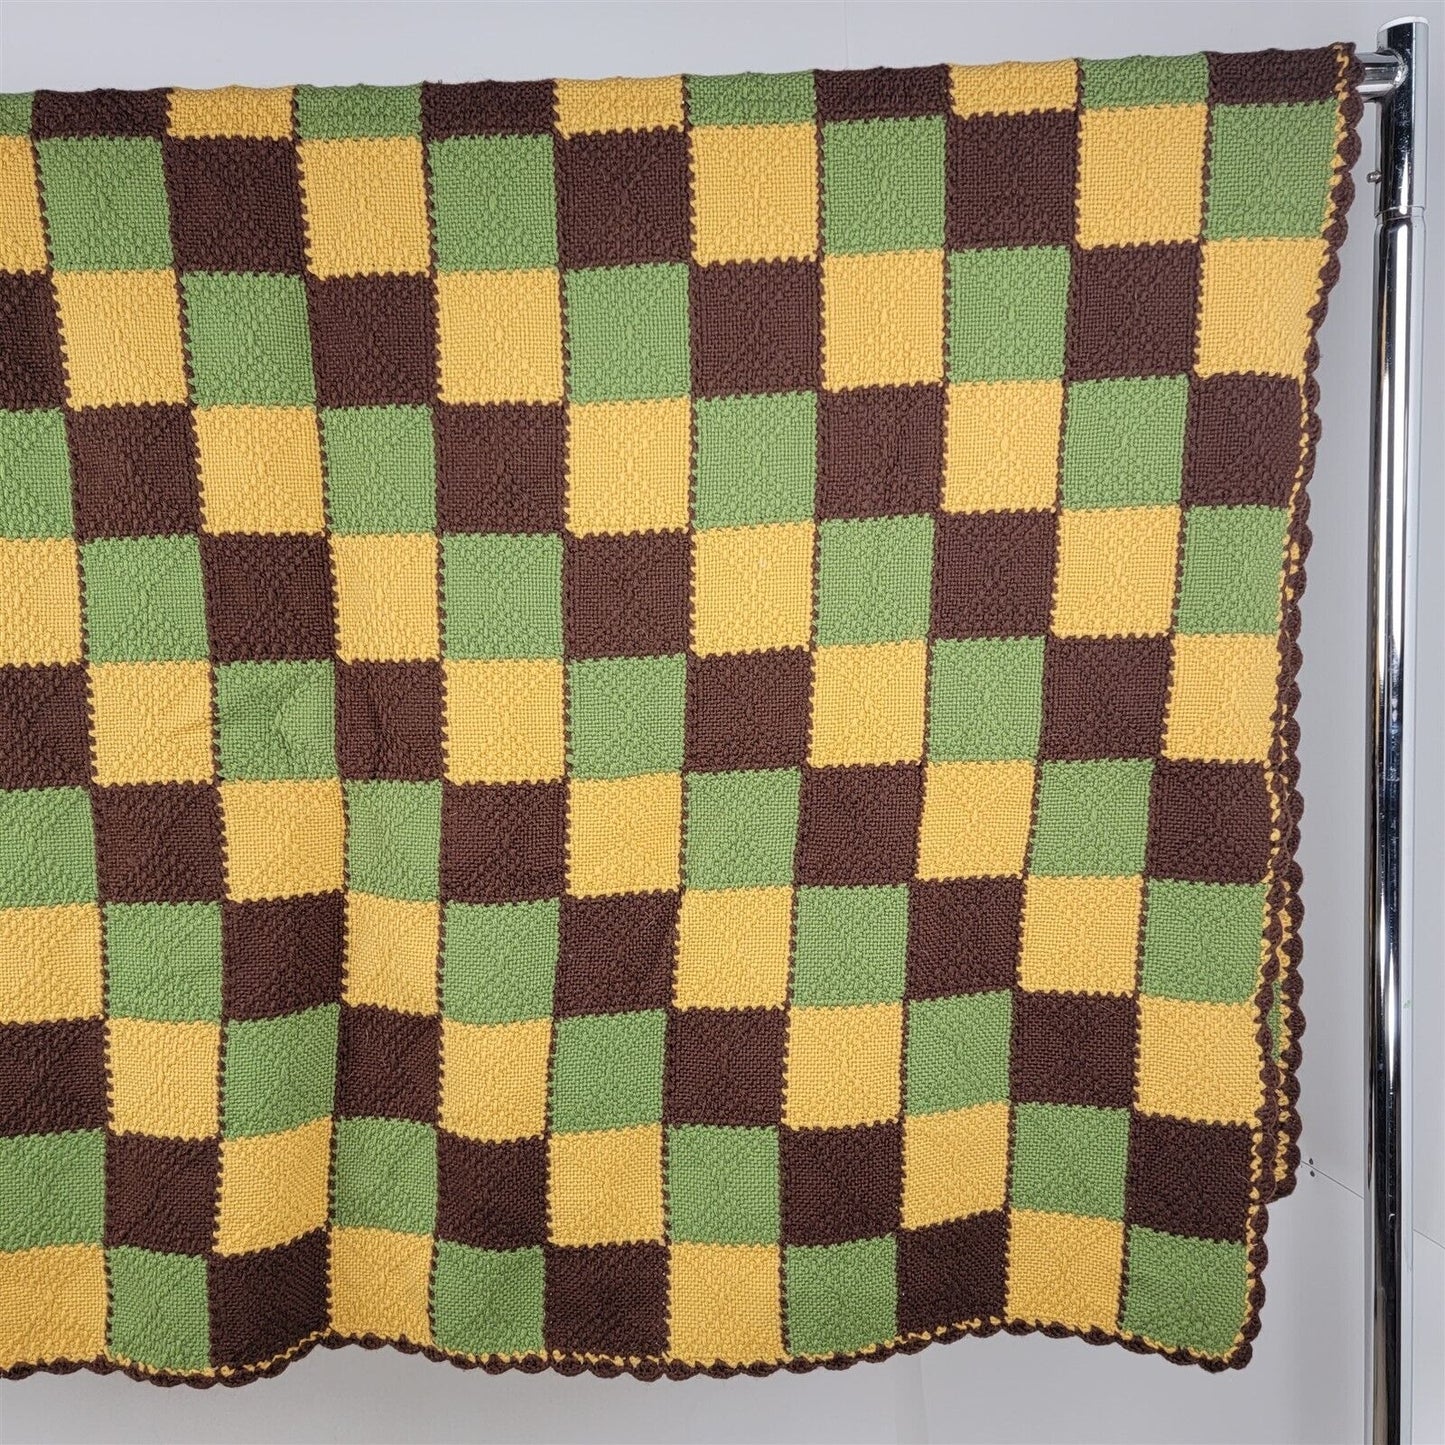 Vintage Crochet Knit Woven Lap Blanket Throw 70x56 Brown Yellow Green Retro